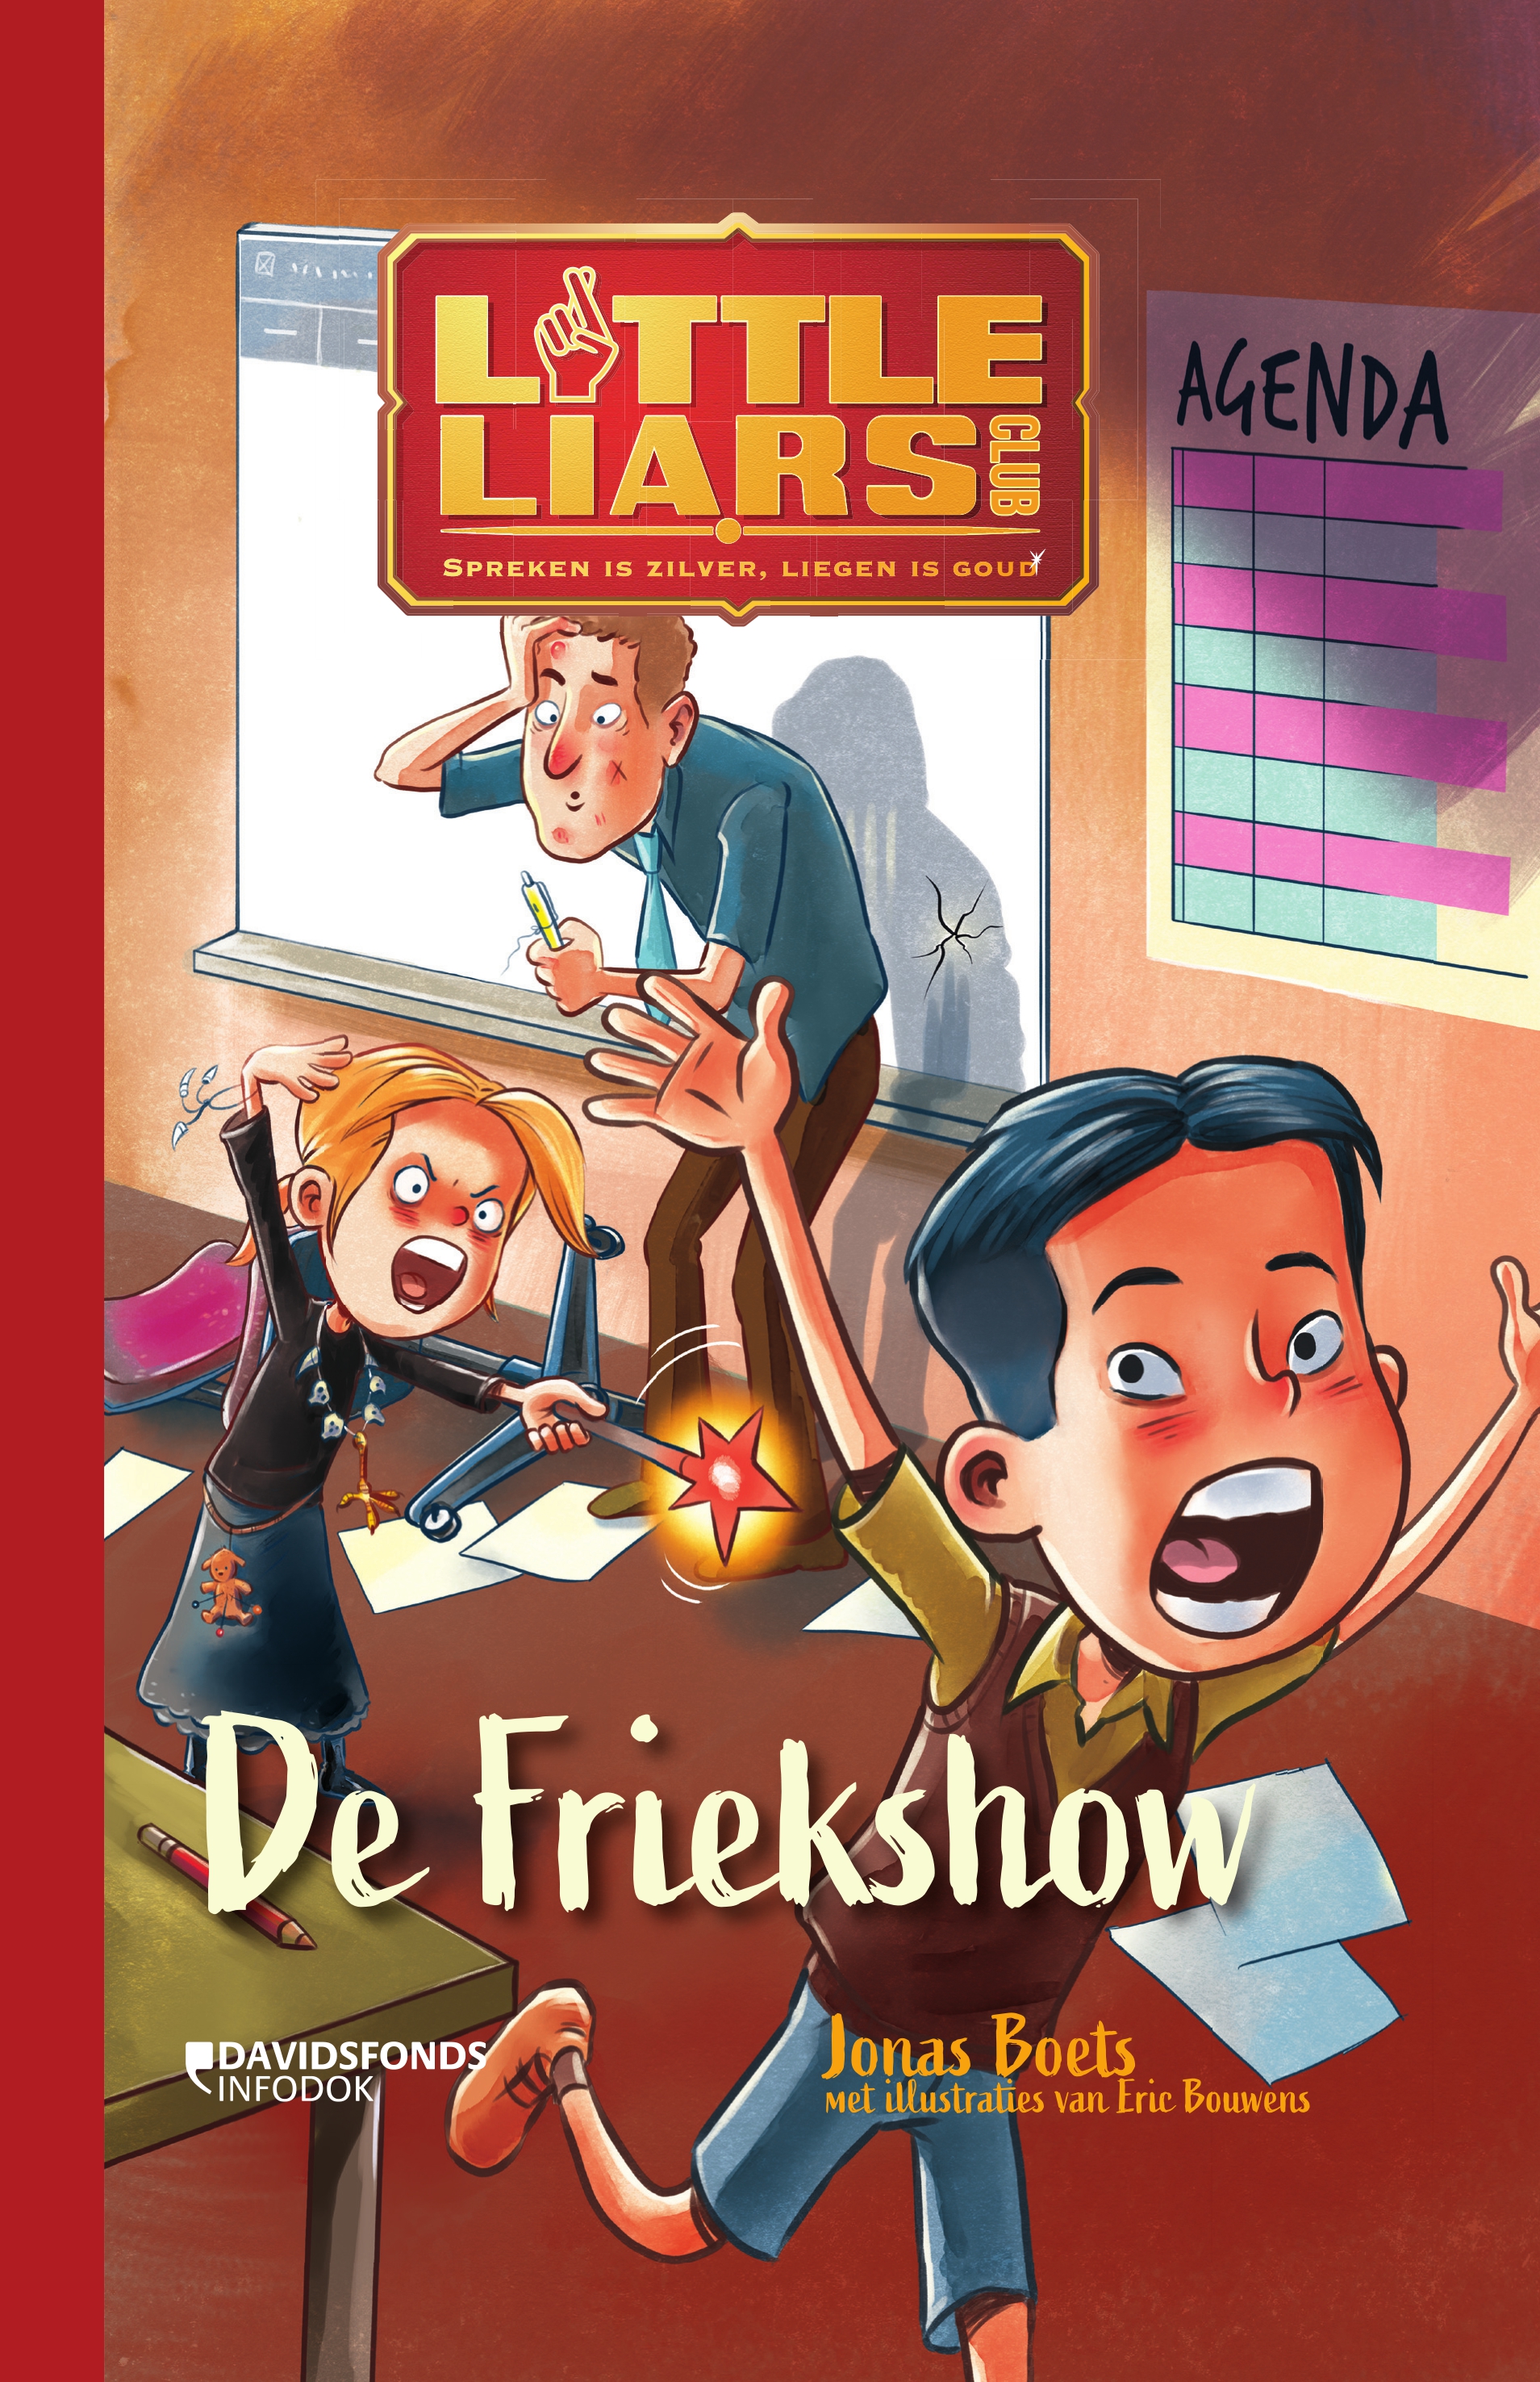 Little liars club De FriekshowHardback